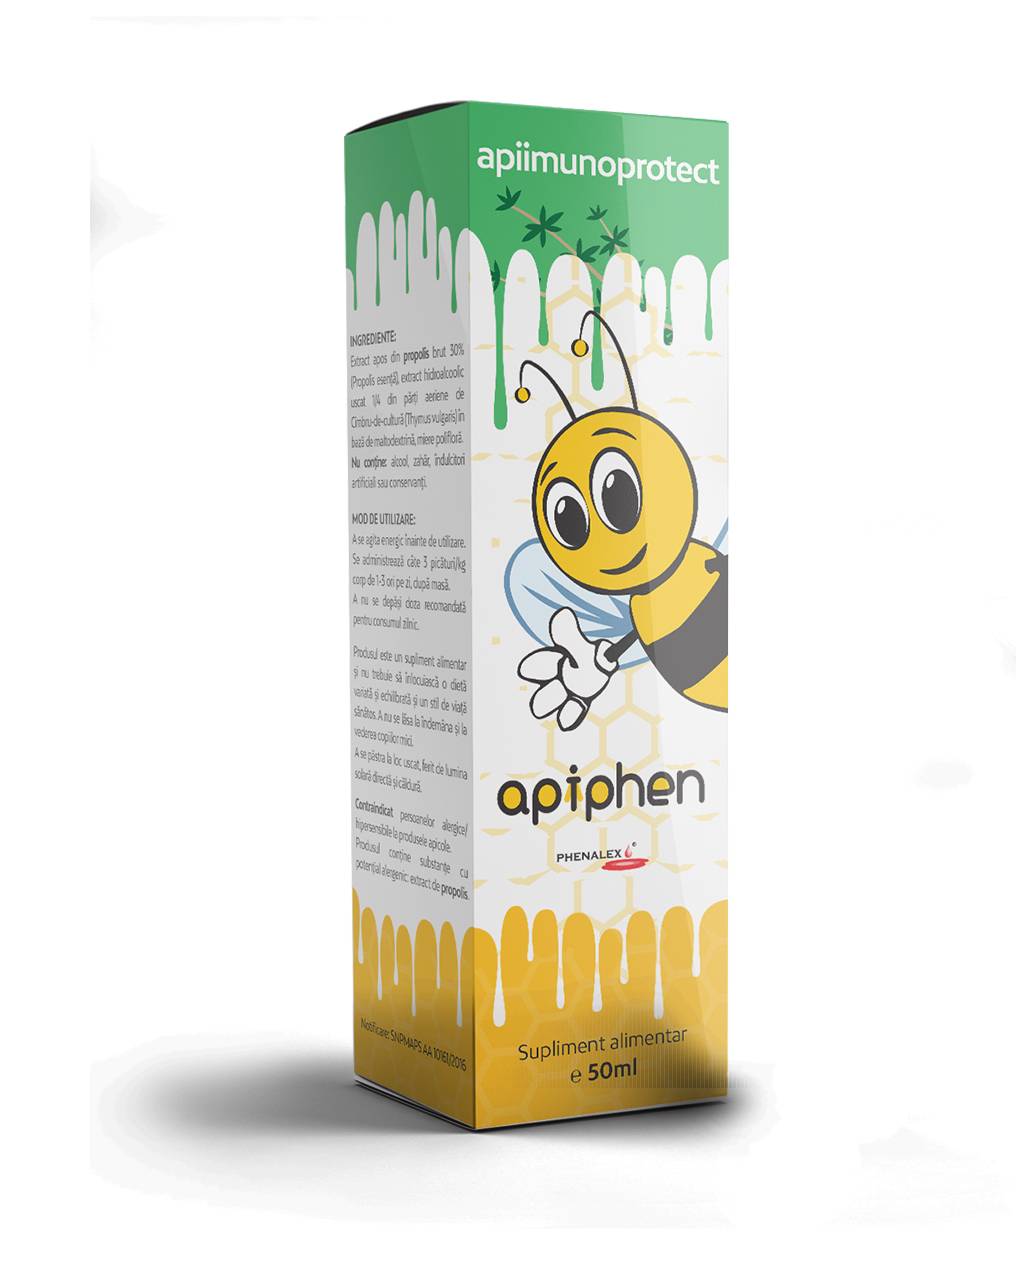 Apiphen apiimunoprotect 50ml - phenalex